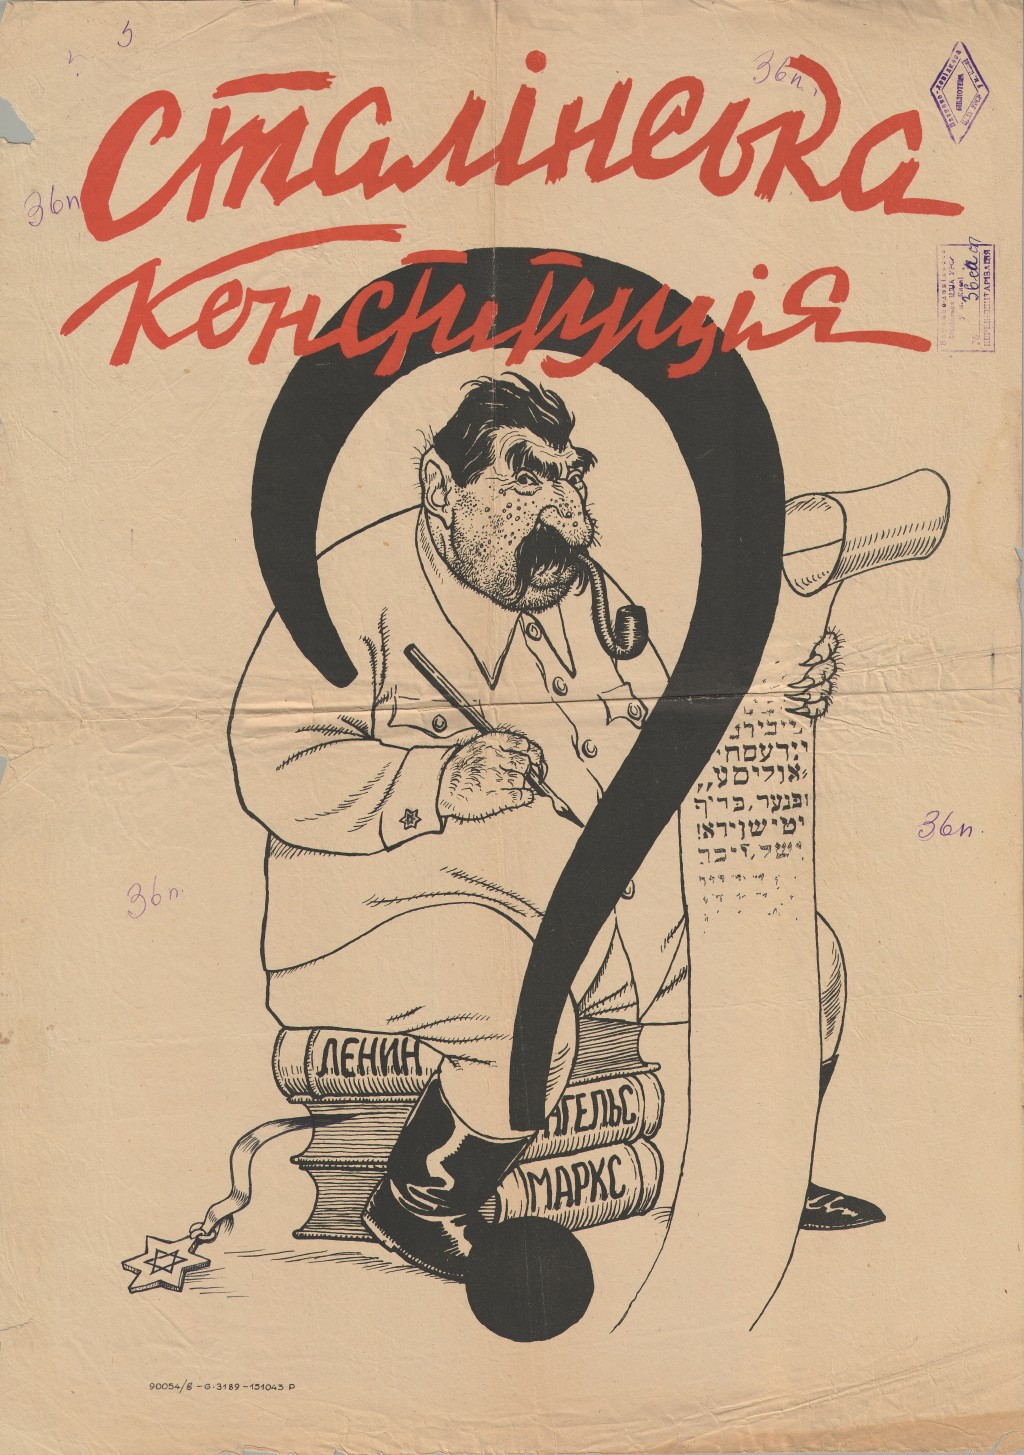 Nazi propaganda poster titled “The Stalin Constitution?”